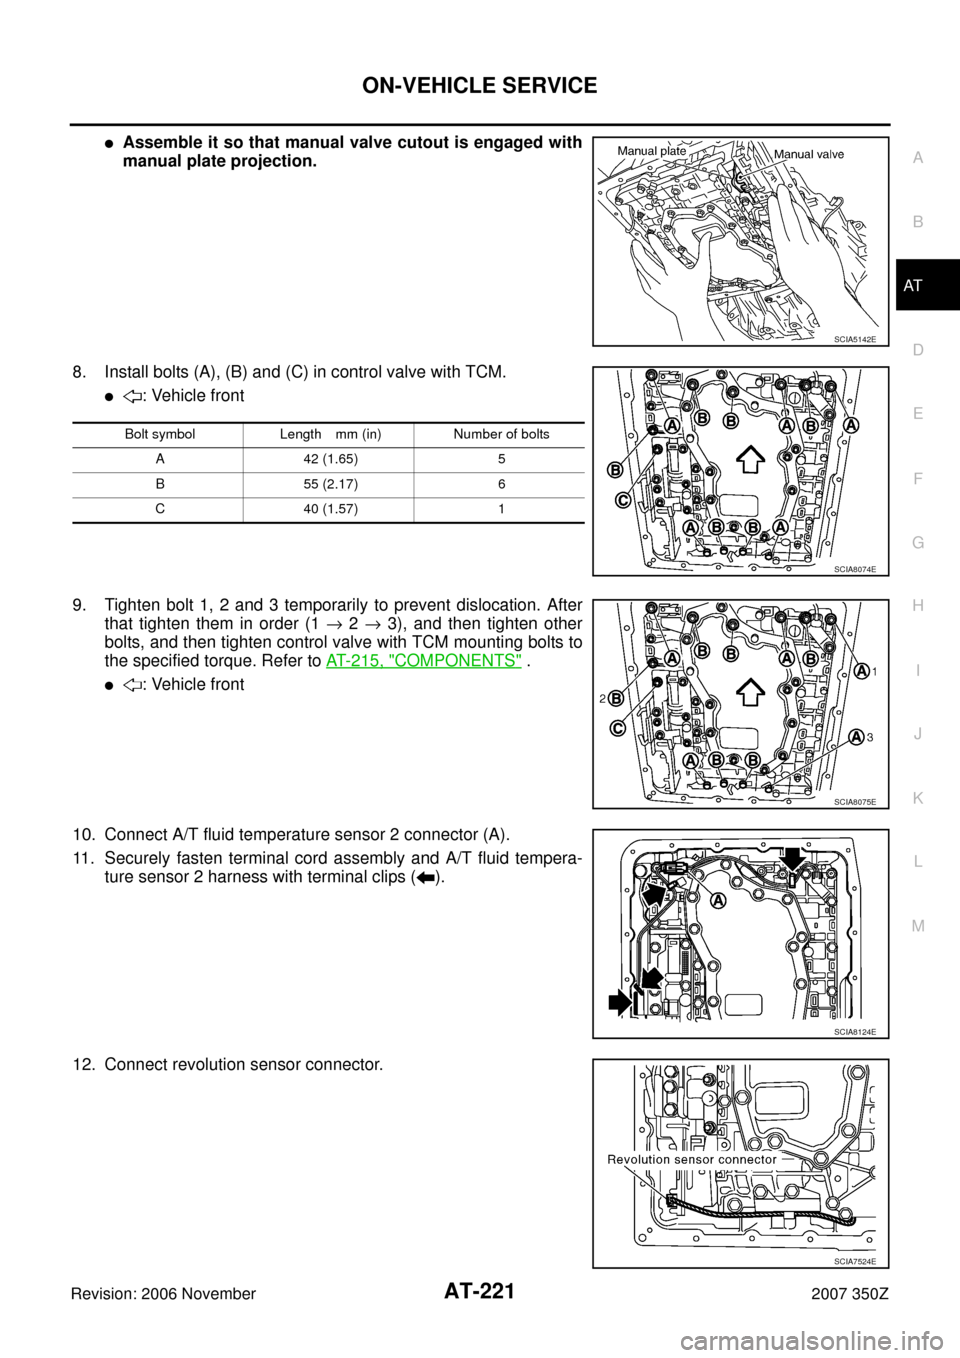 NISSAN 350Z 2007 Z33 Automatic Transmission Owners Guide ON-VEHICLE SERVICE
AT-221
D
E
F
G
H
I
J
K
L
MA
B
AT
Revision: 2006 November2007 350Z
Assemble it so that manual valve cutout is engaged with
manual plate projection.
8. Install bolts (A), (B) and (C)